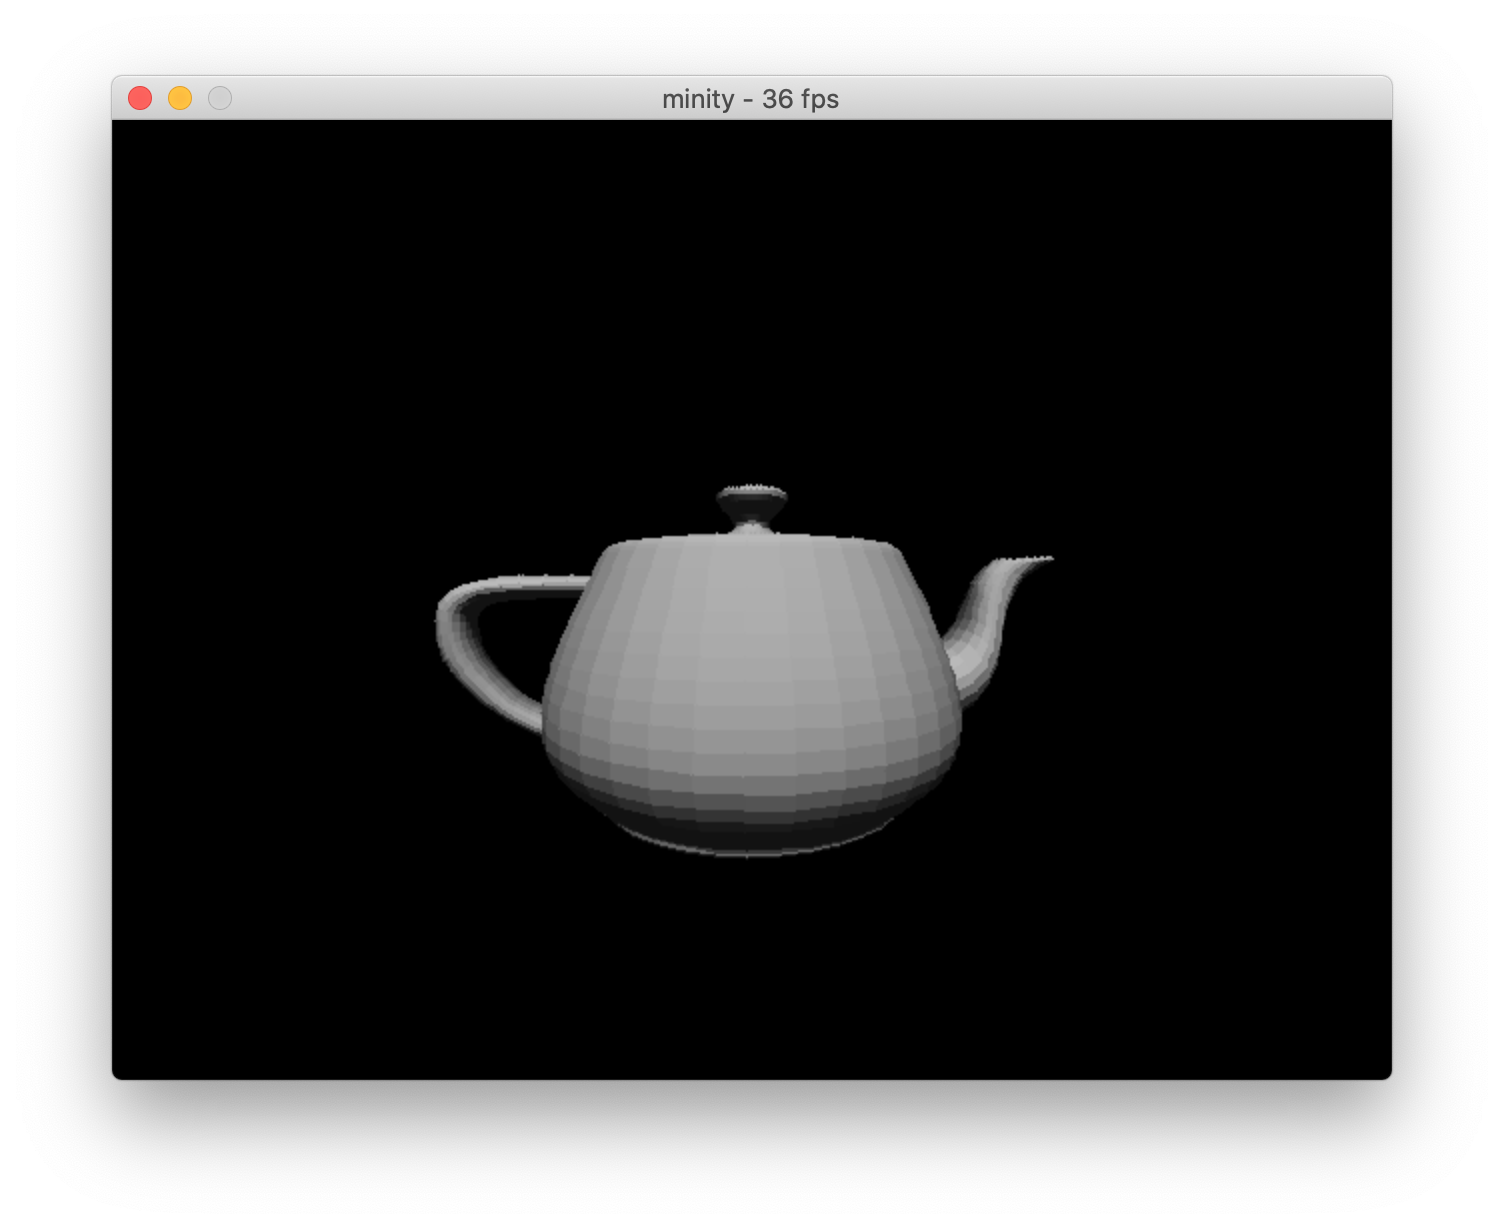 Minity spinning a shaded Utah teapot